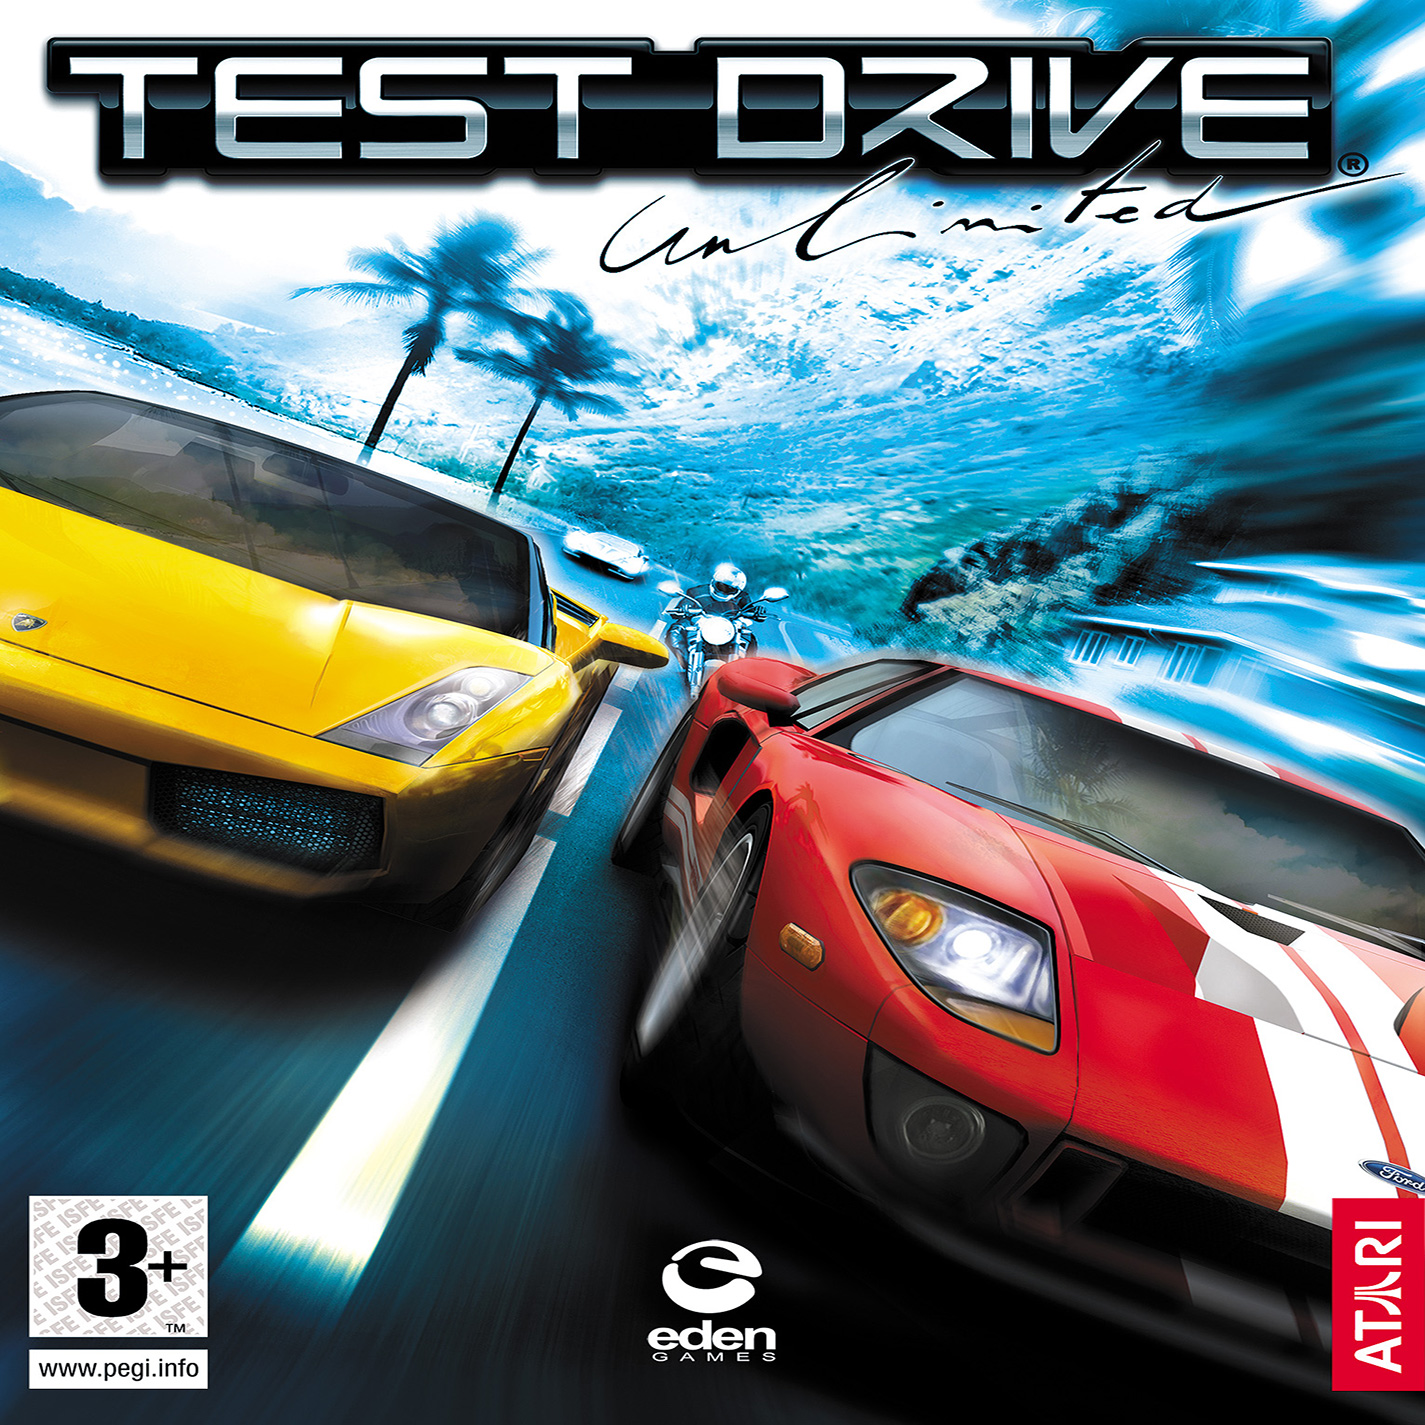 Первый тест драйв. Test Drive Unlimited обложка. Test Drive Unlimited 2 обложка. Test Drive Unlimited диск. Гонки тест драйв Анлимитед 1.